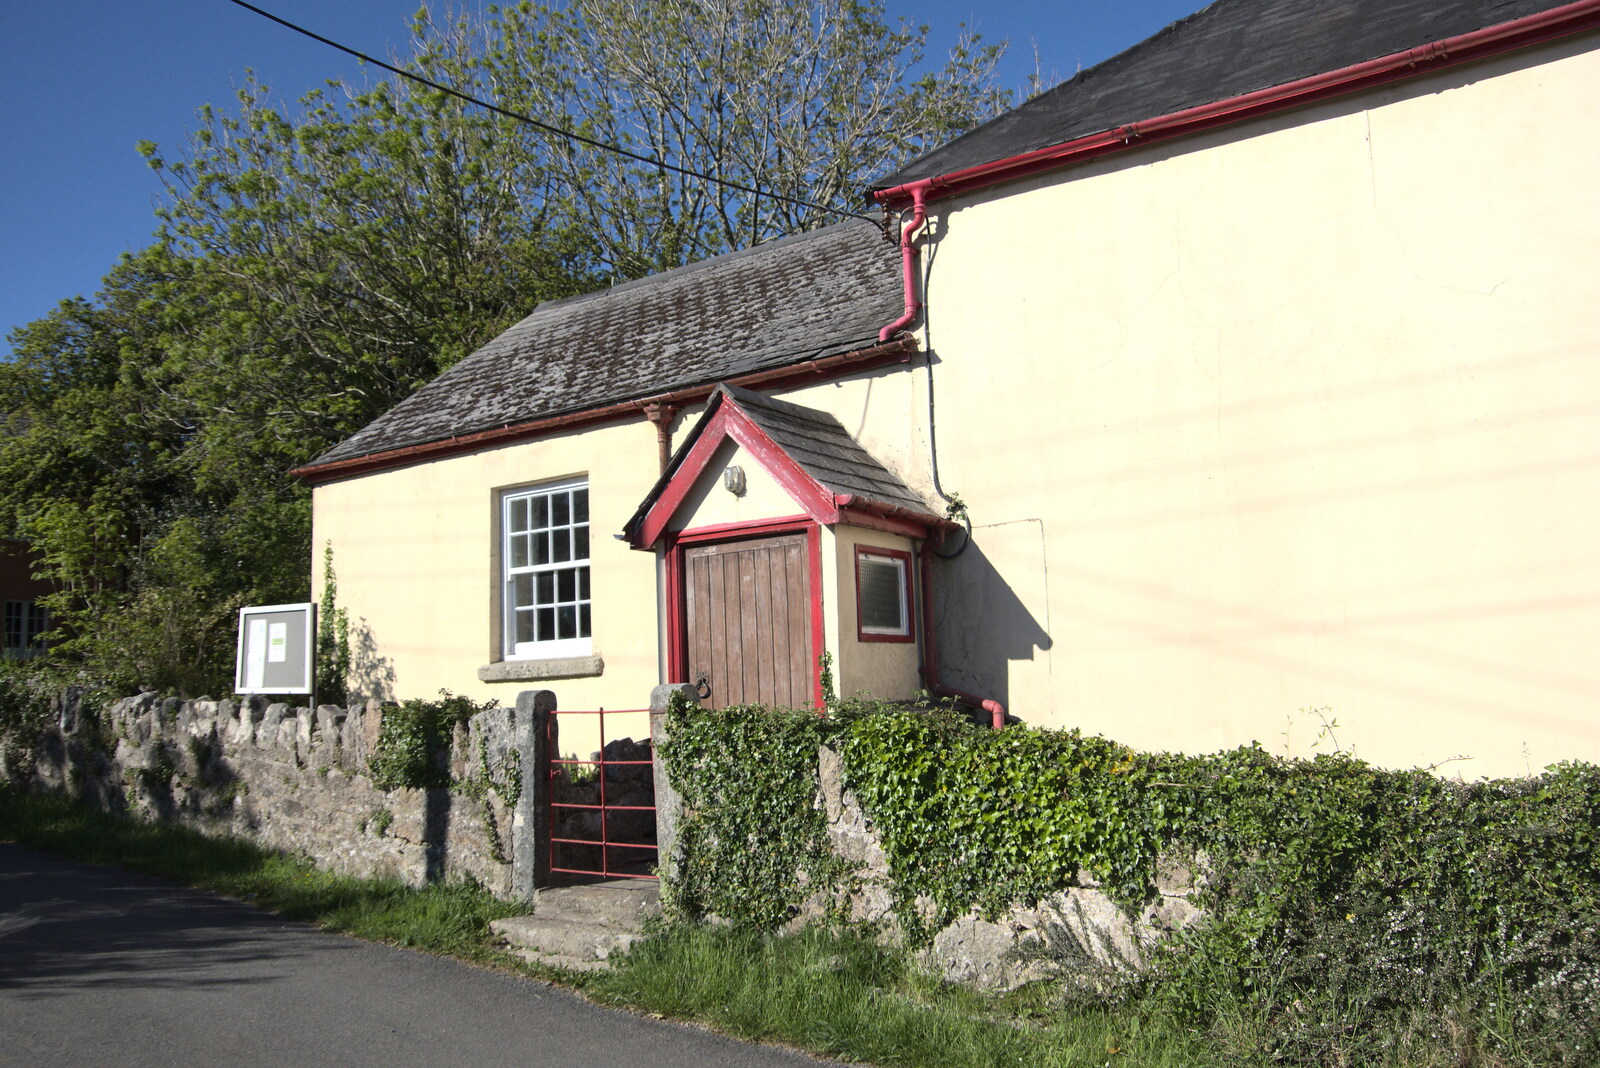 The Providence Chapel from A Trip to Grandma J's, Spreyton, Devon - 2nd June 2021